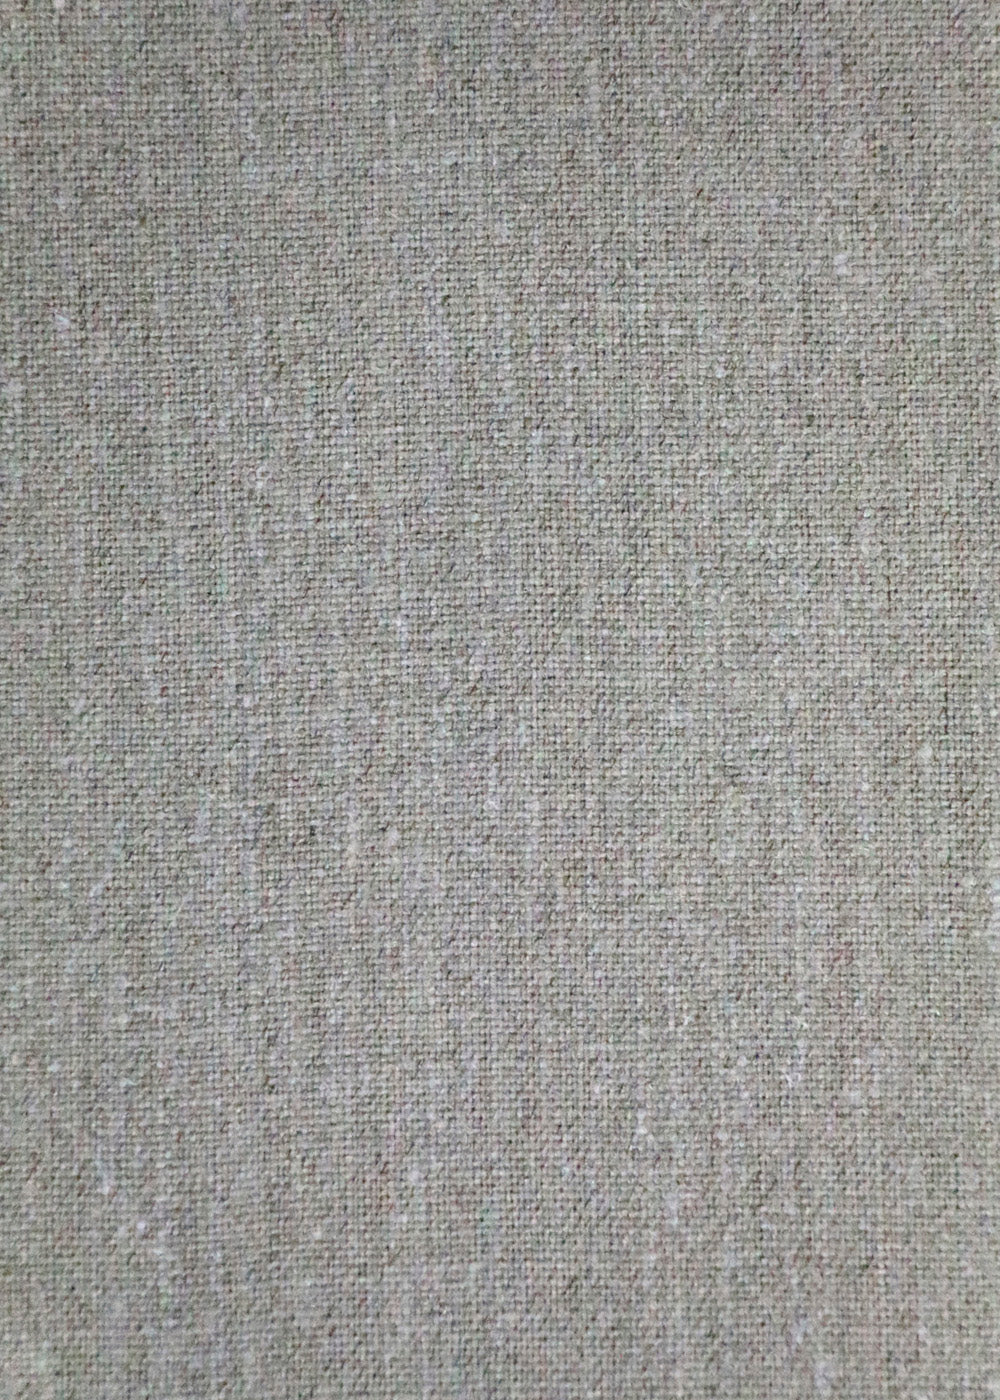 flecked grey linen fabric